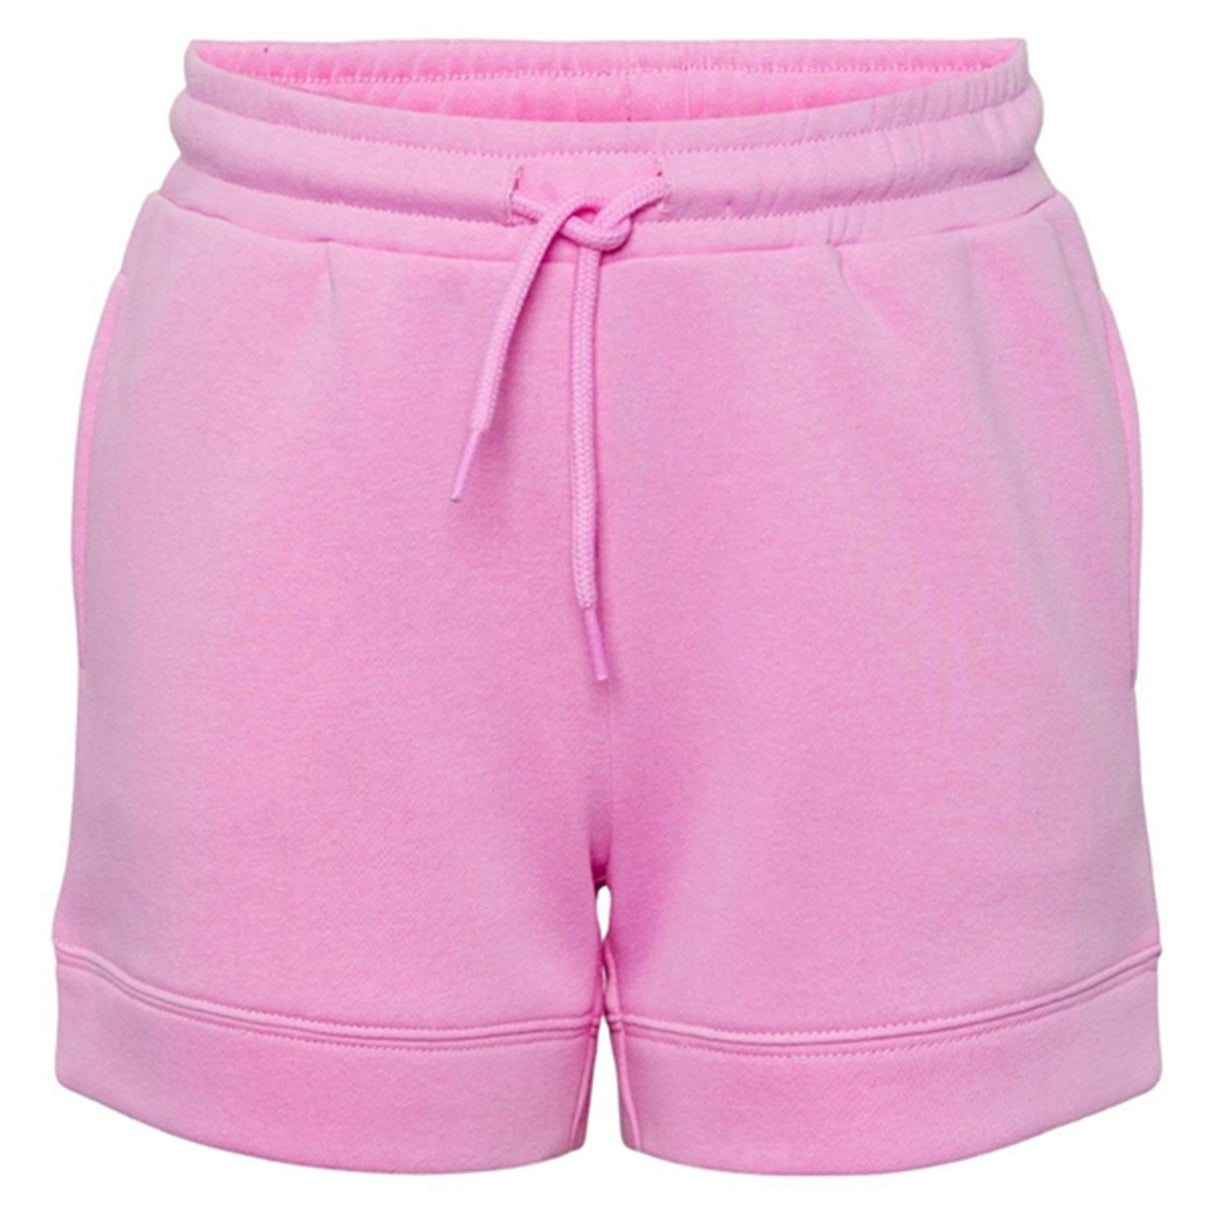 Pieces Kids Begonia Pink Chilli Sweat Shorts